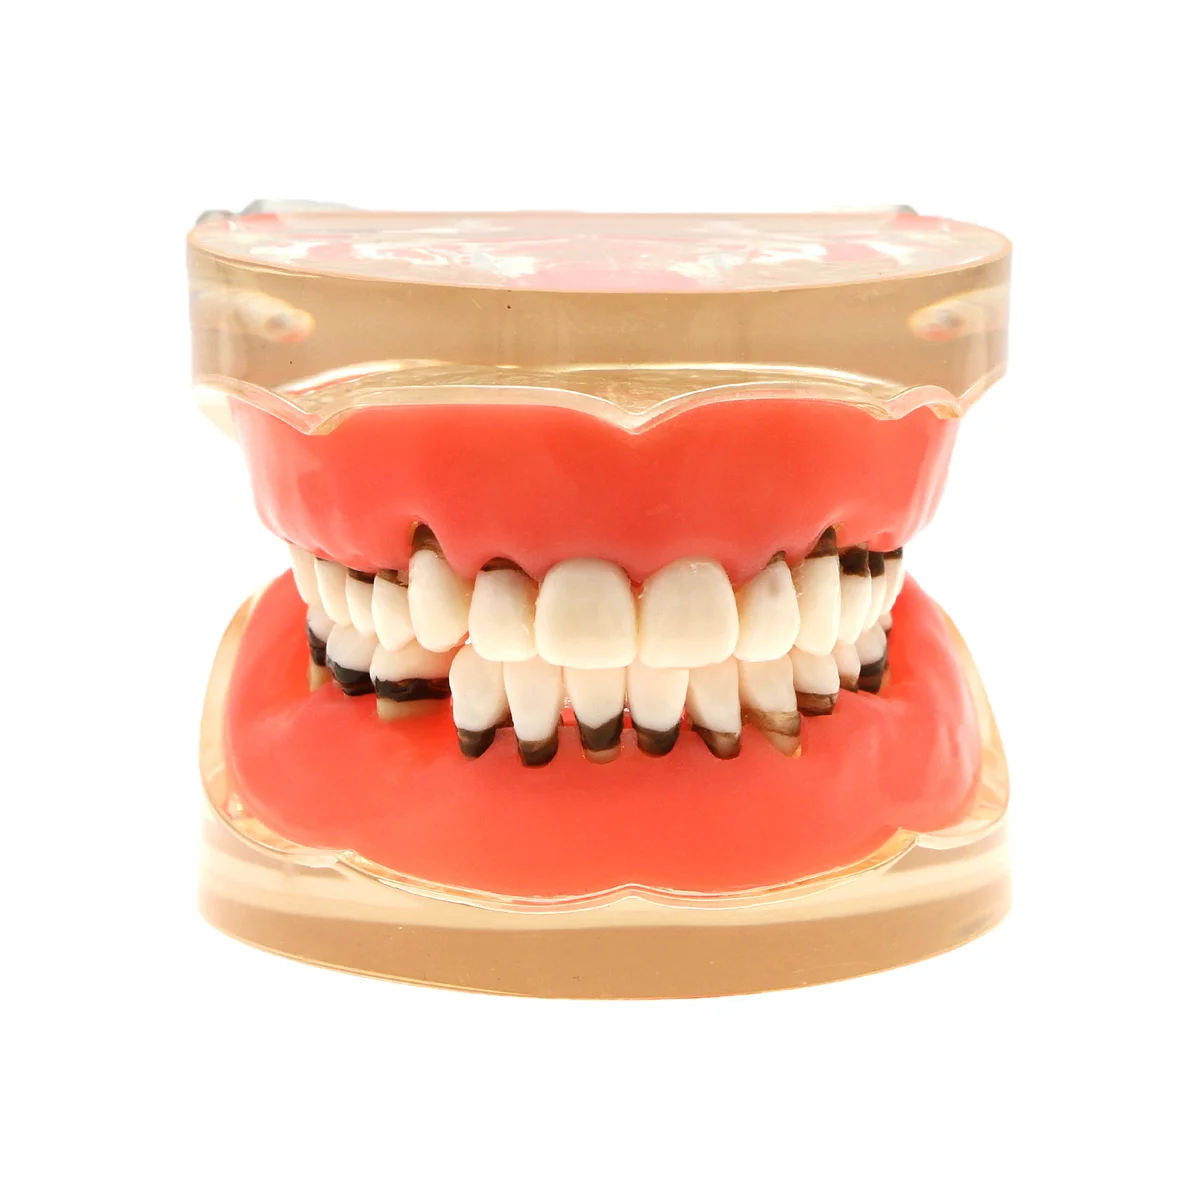 

Dental Model Adult Pathological Periodontal Disease Study Teach Teeth M4017